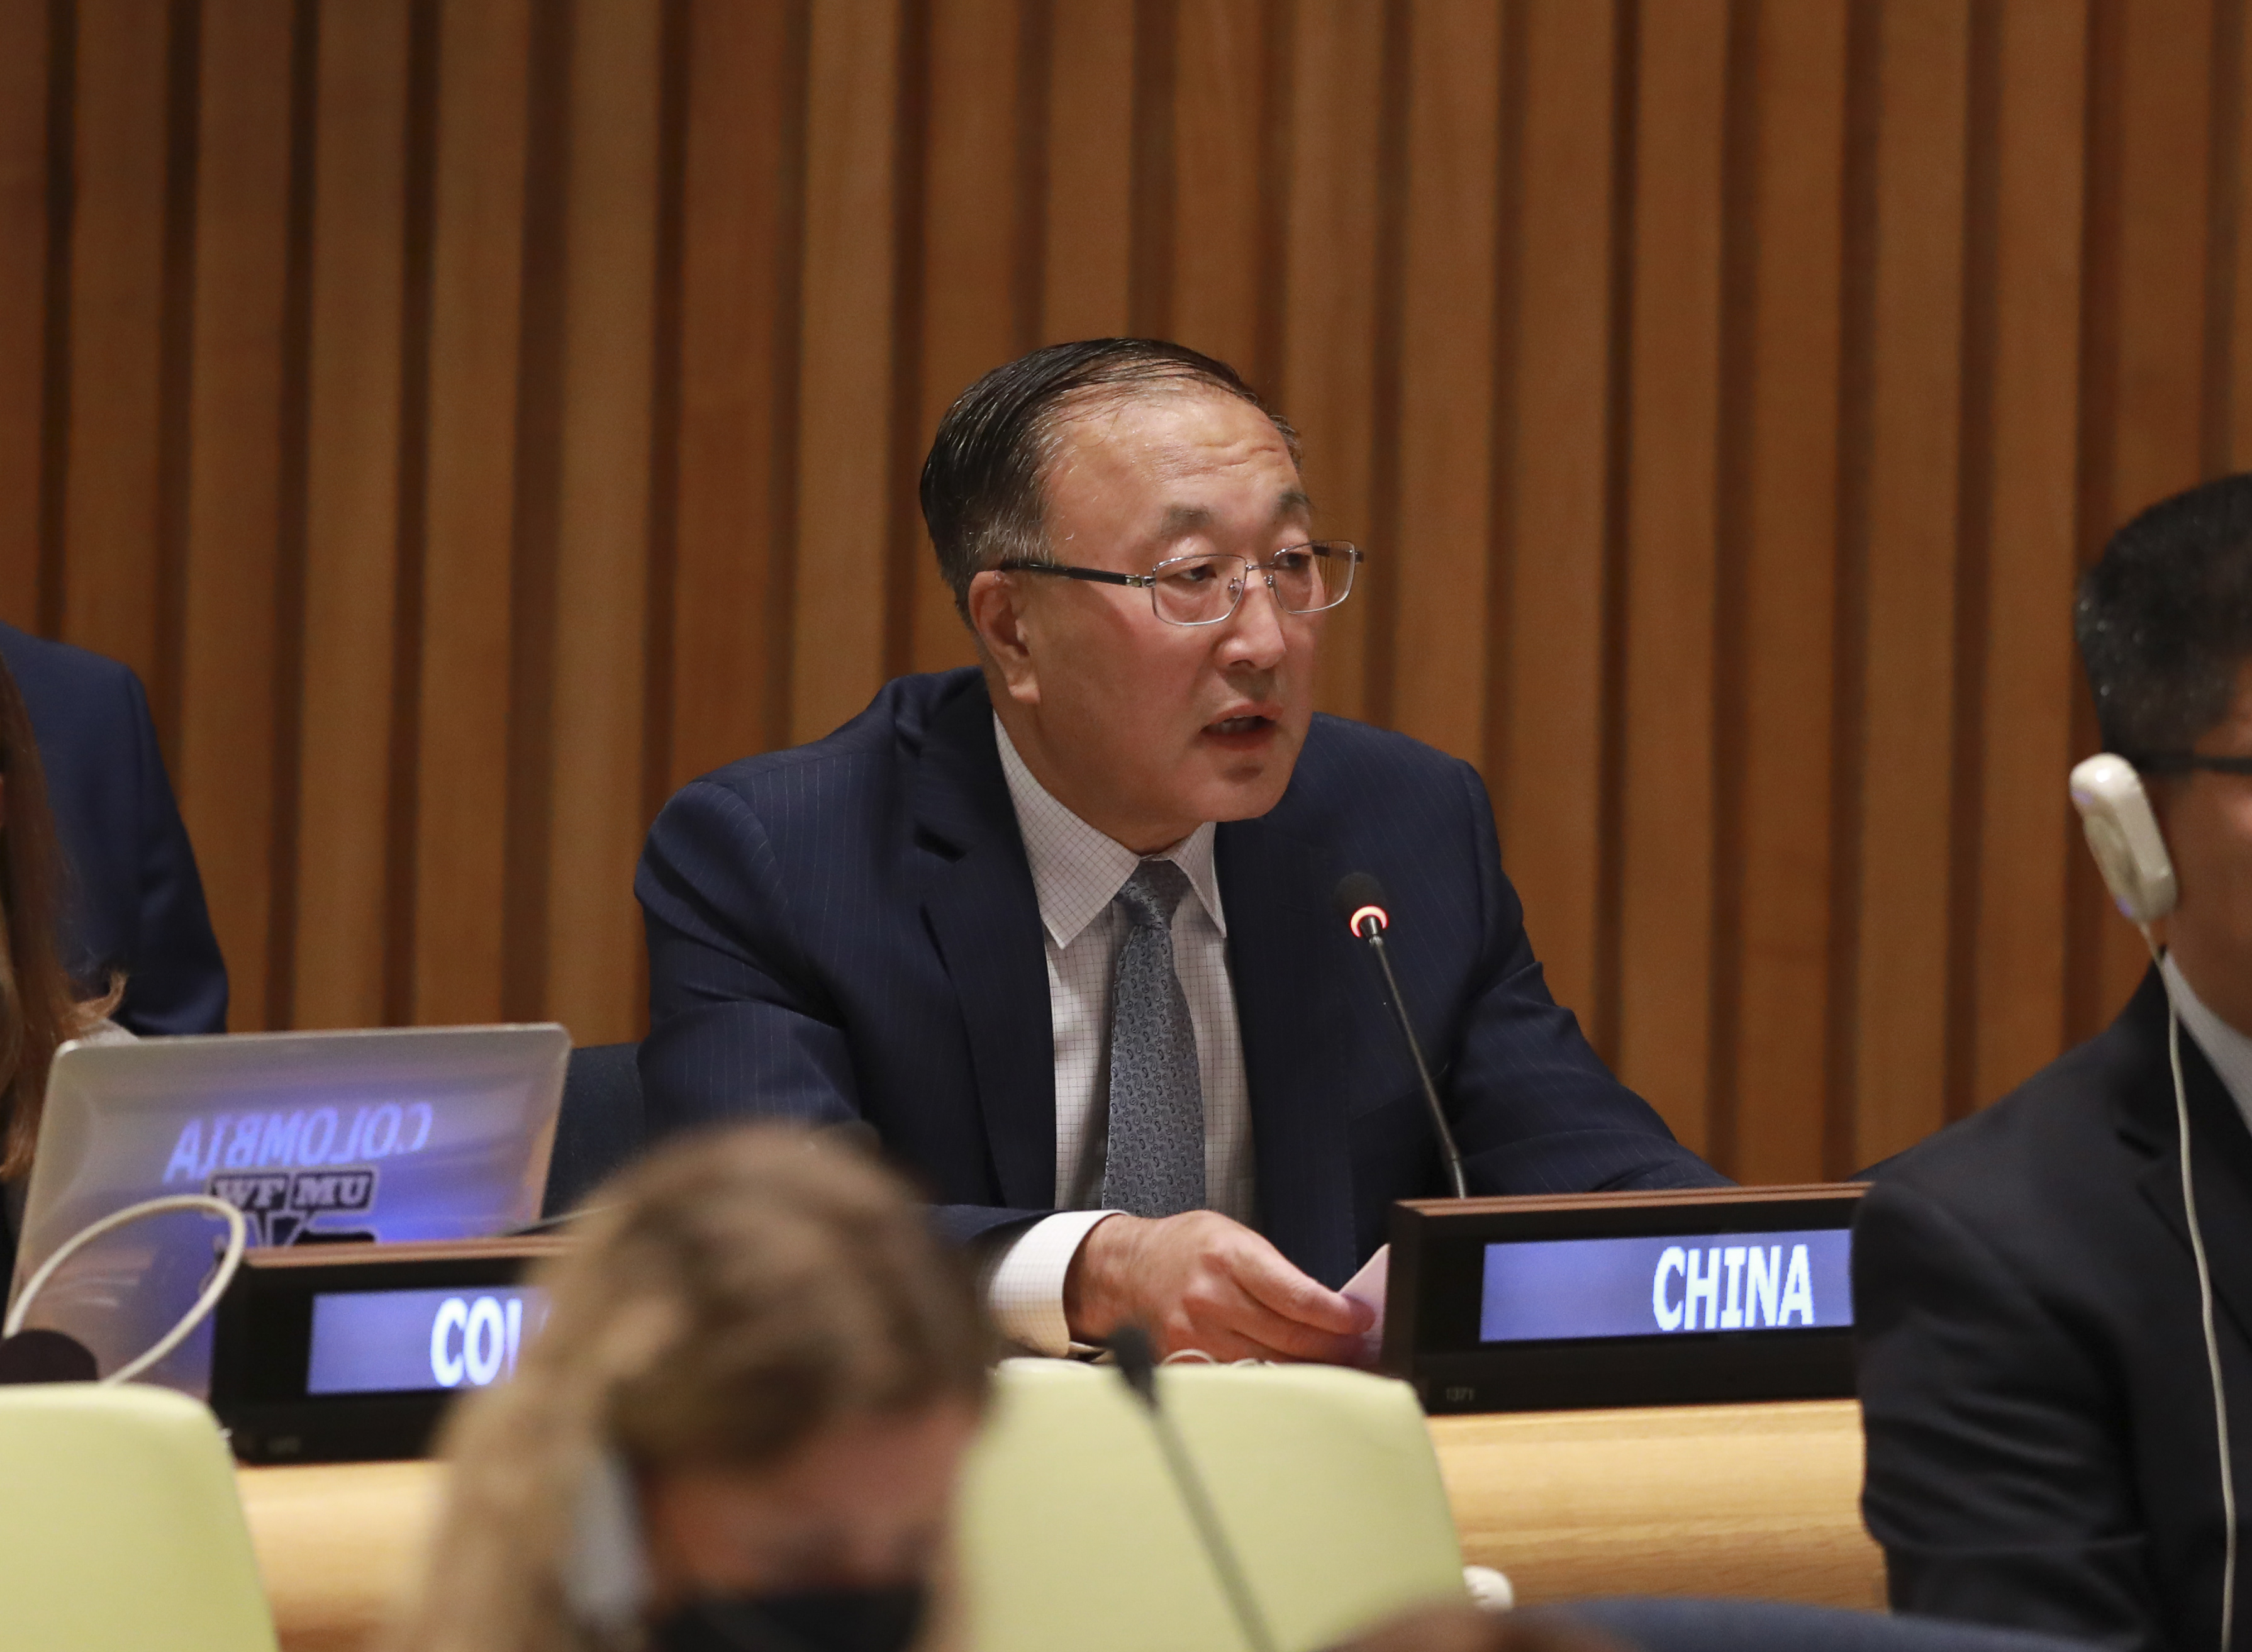 Zhang Jun, China's permanent representative to the United Nations